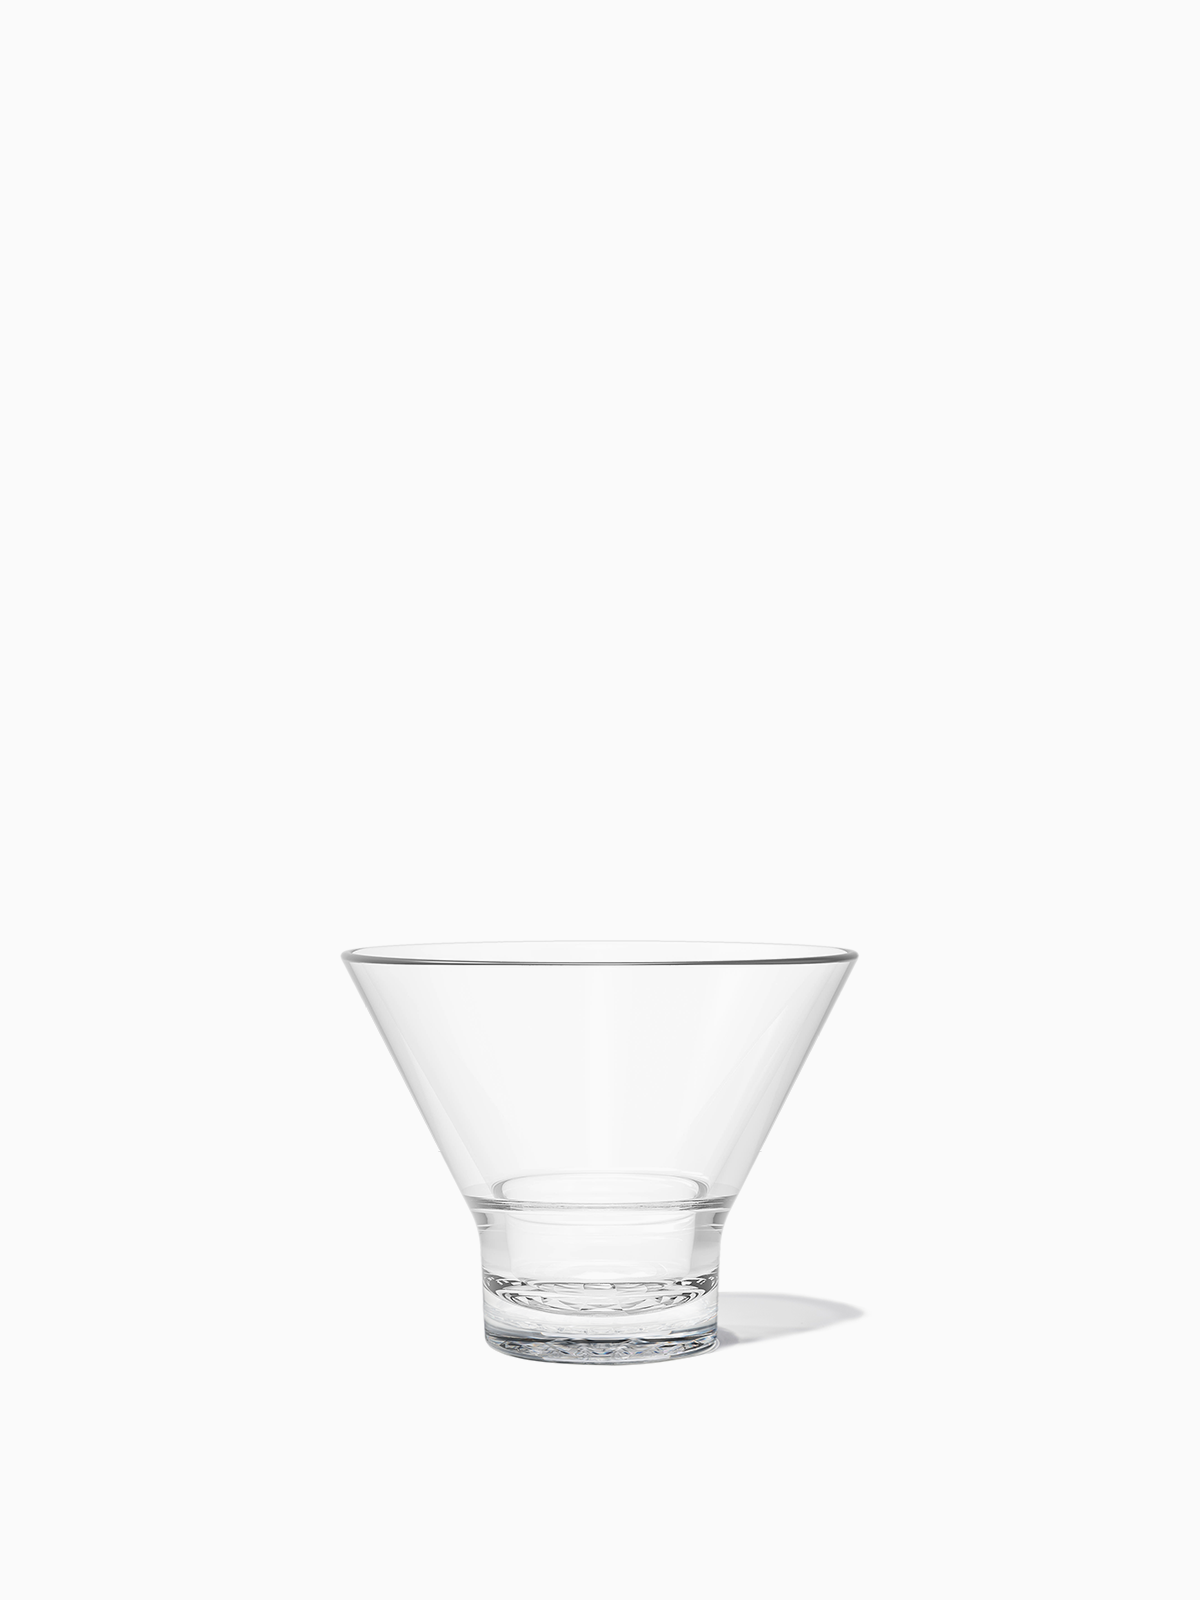 Tossware Reserve Martini Tritan Copolyester Glasses, Set of 4 on Food52